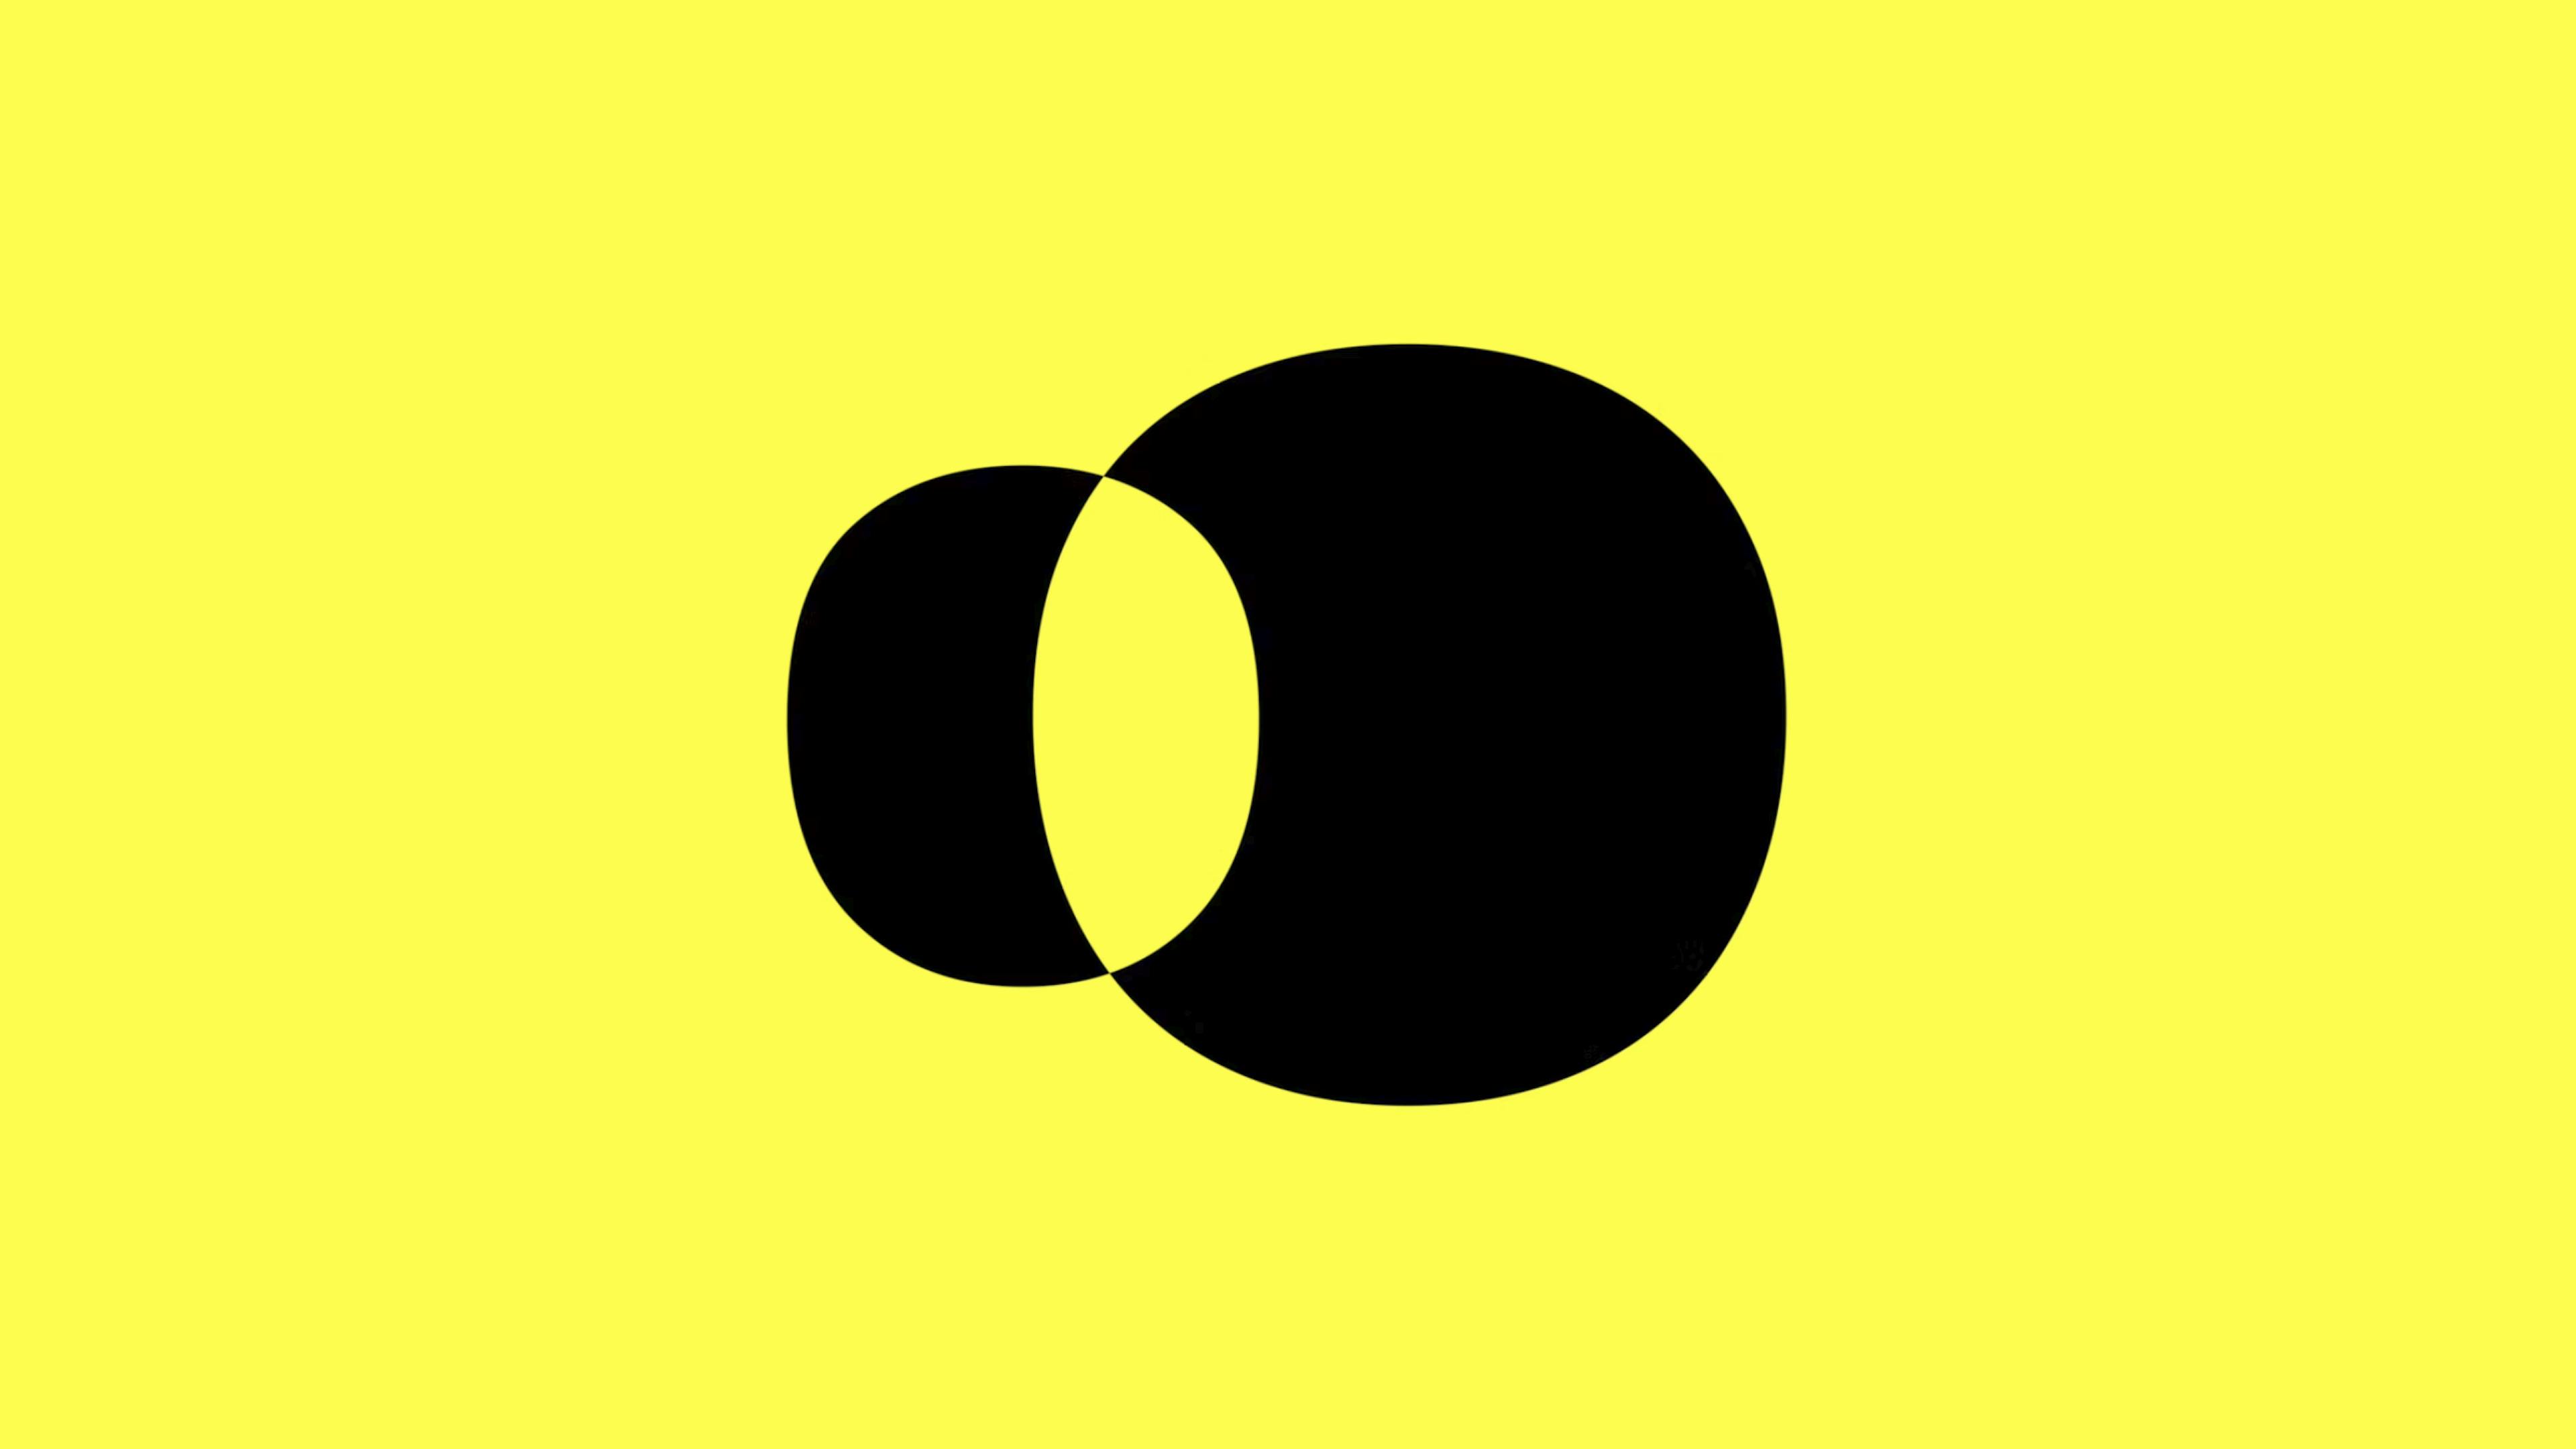 Motion design of the Echio logo.